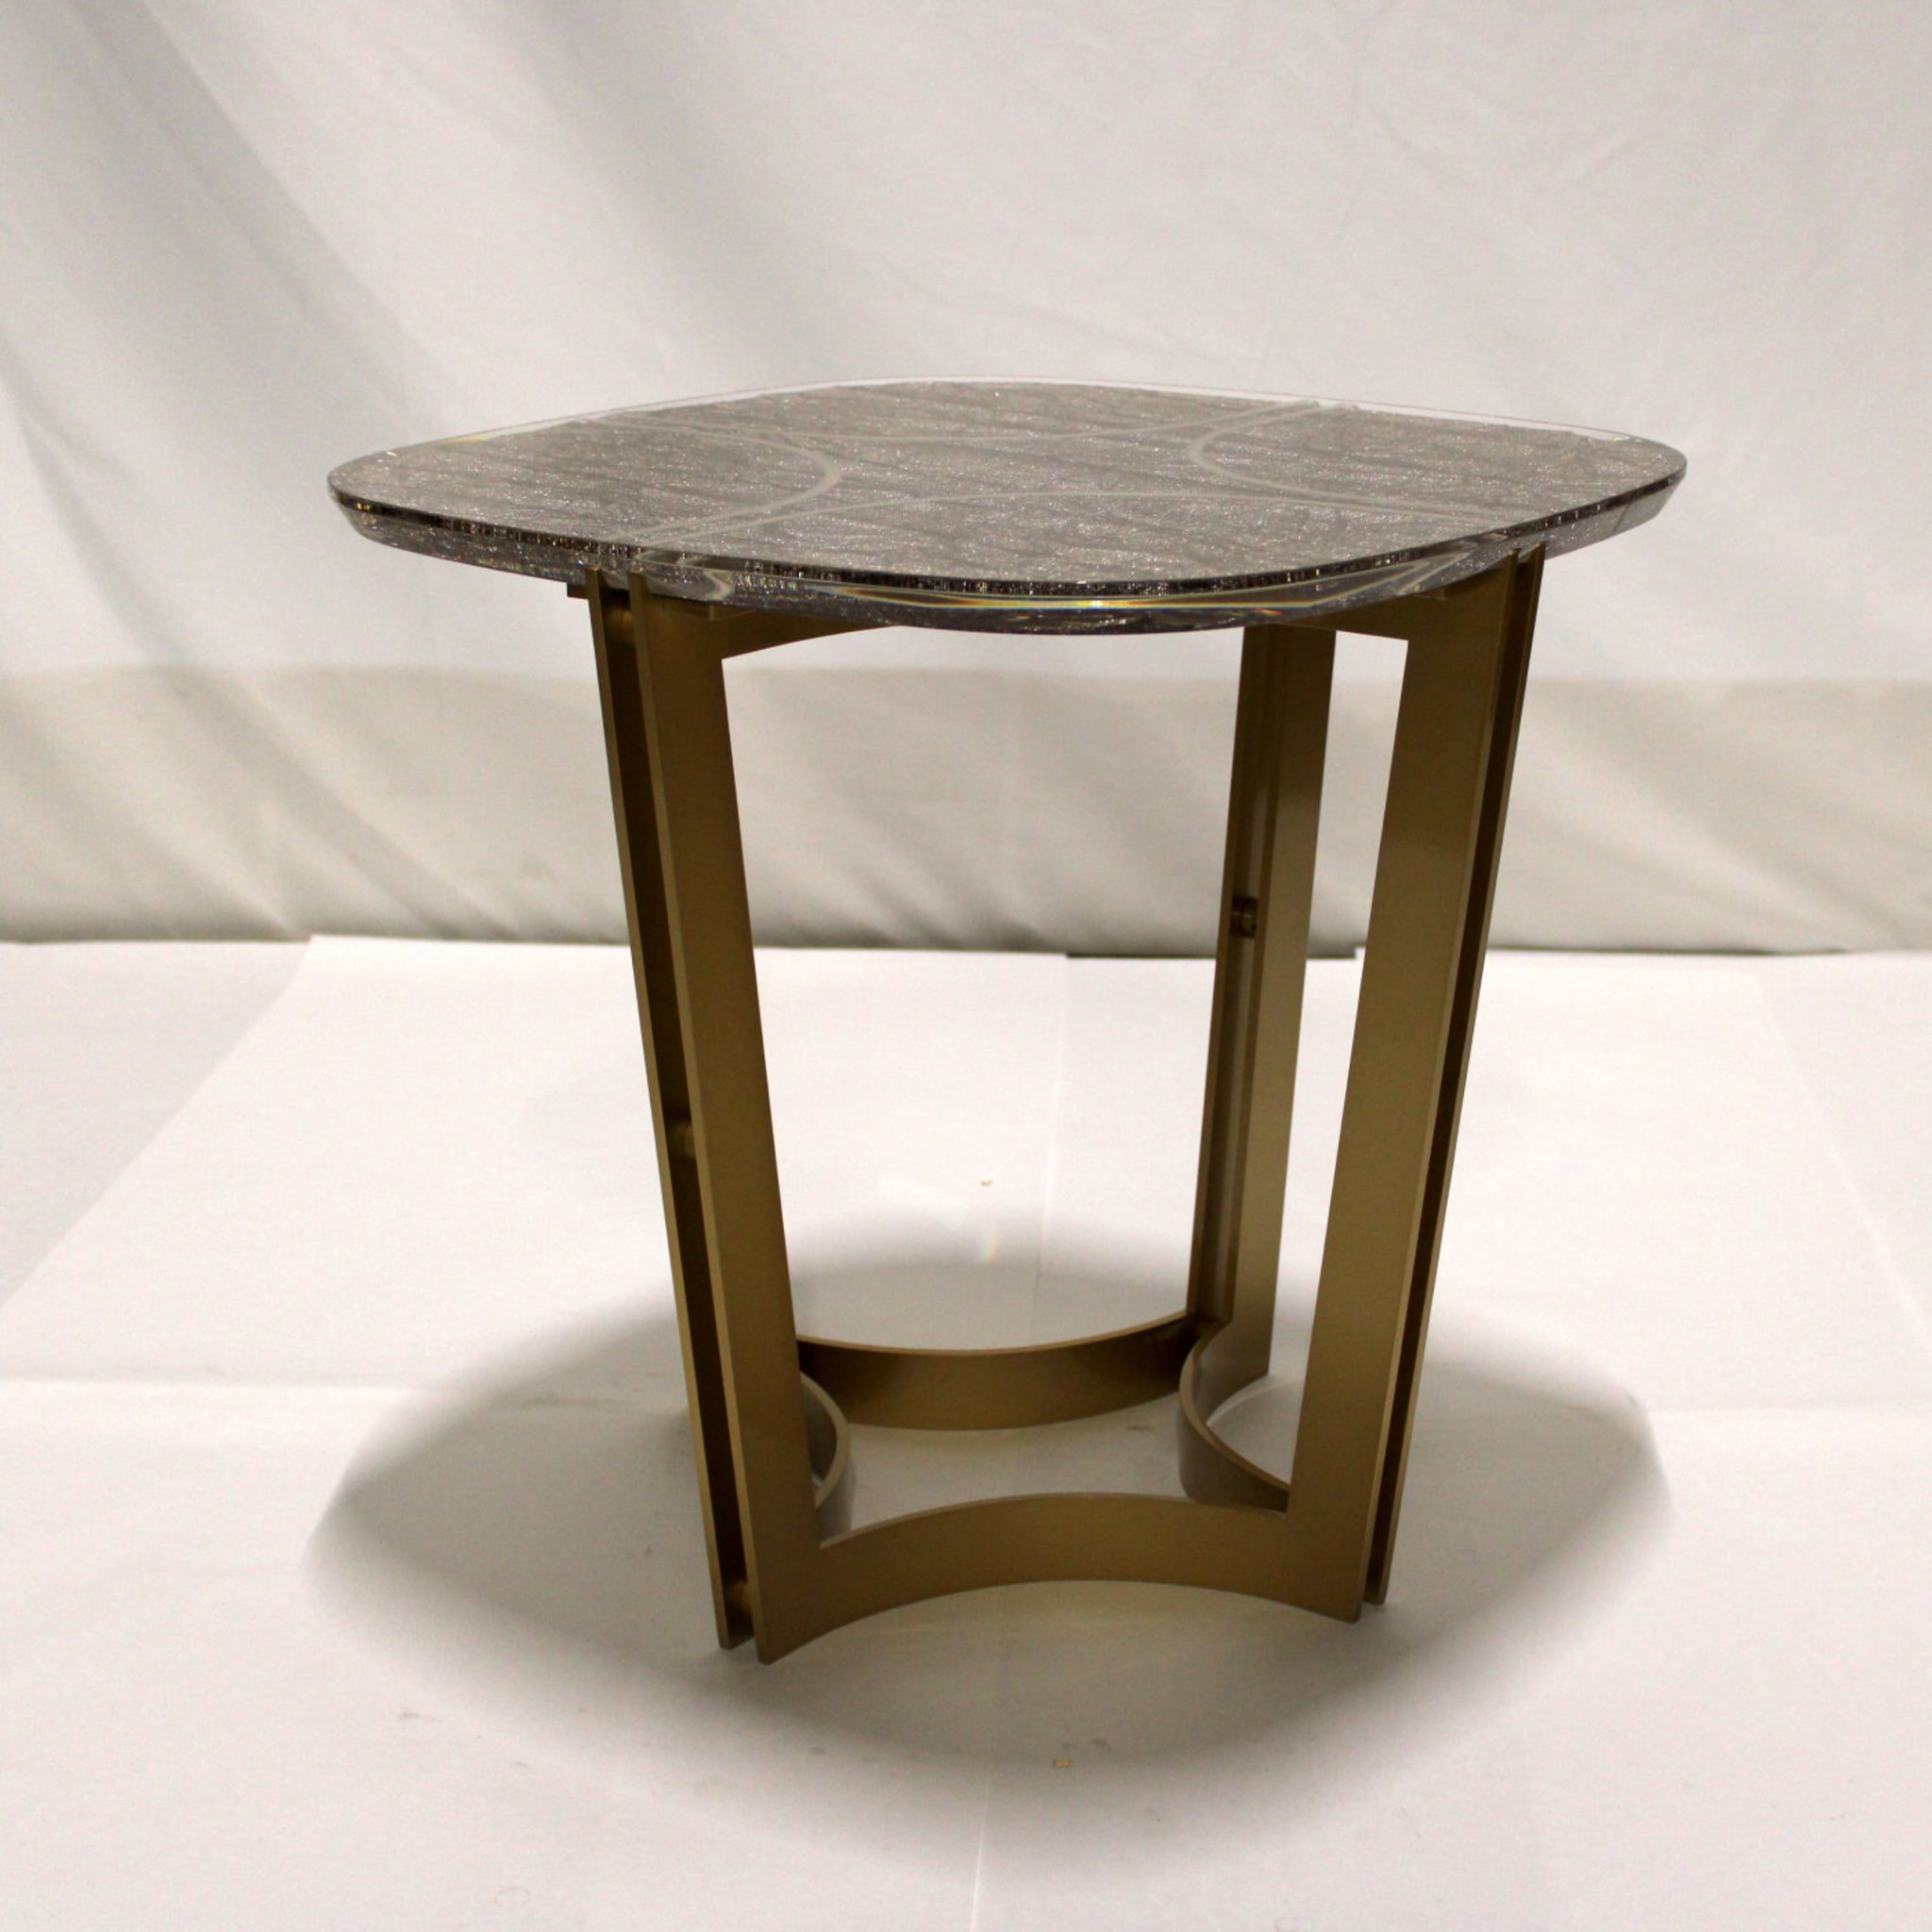 Rossellini Bronze coffee table tall - Alternative view 1